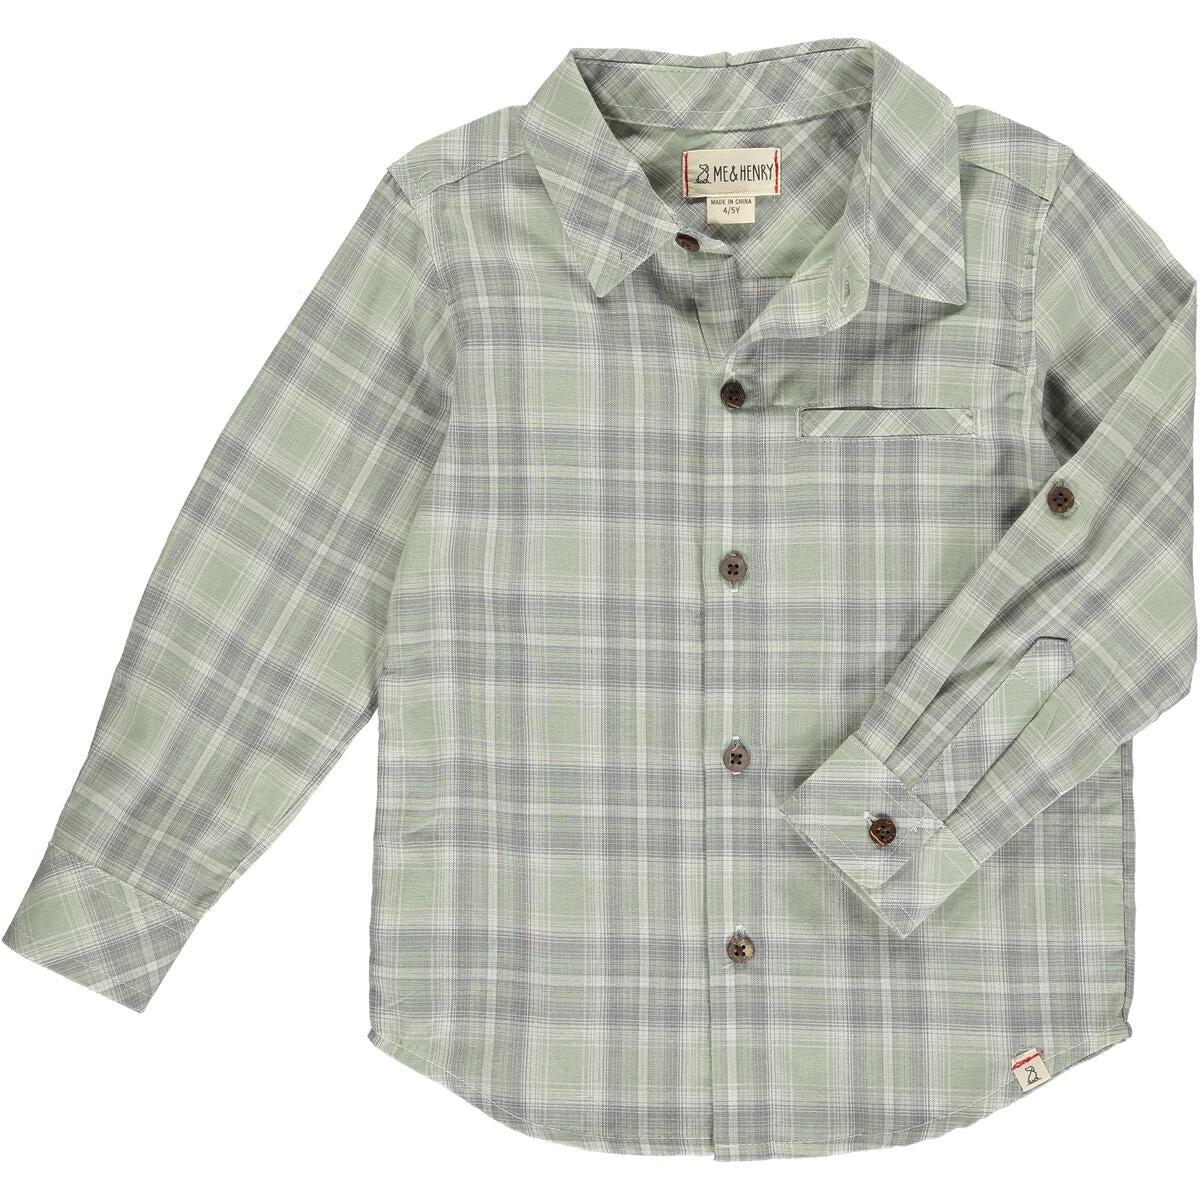 Atwood Woven shirt- Sage/Grey Plaid (FINAL SALE)